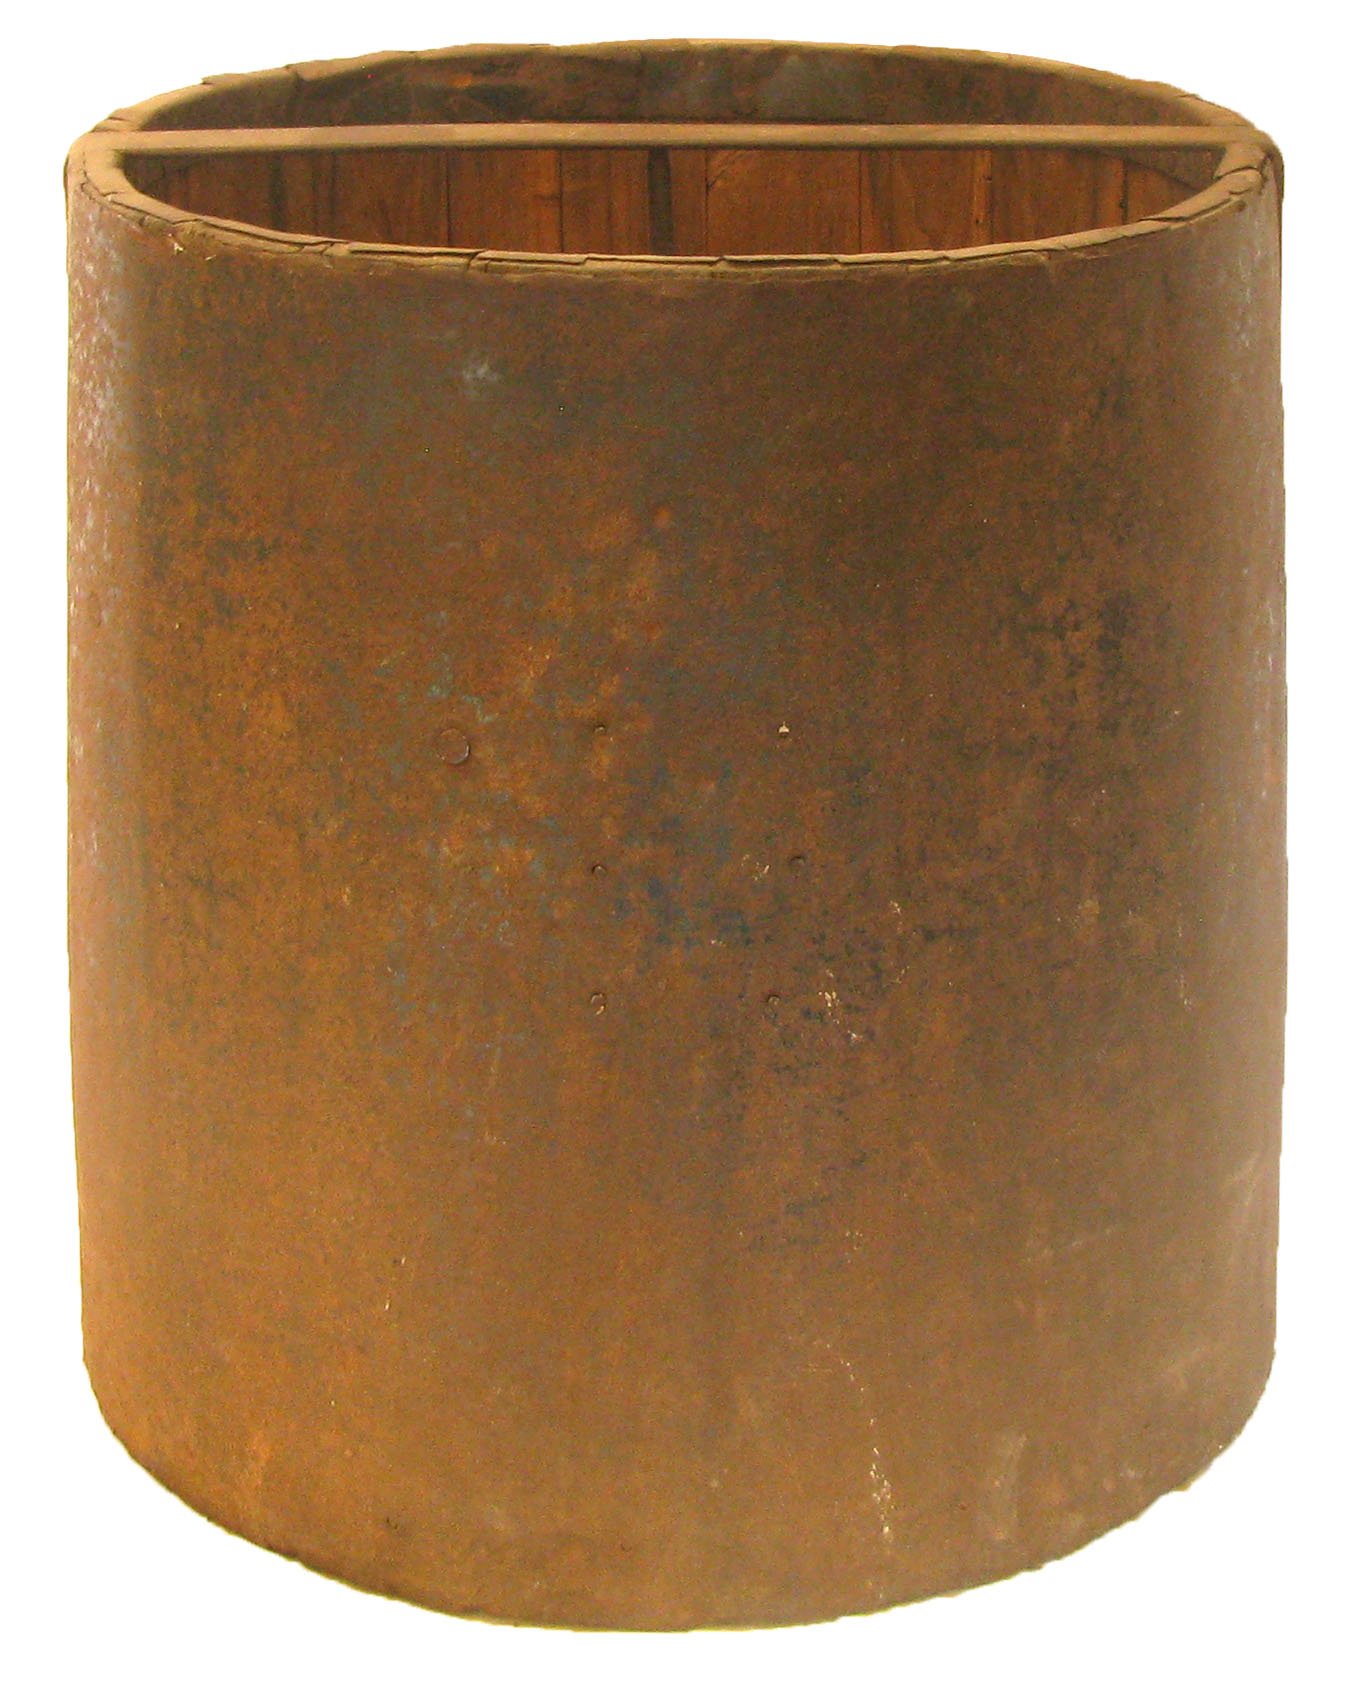 Antique French Wood &Metal Grain Measure~P77600815